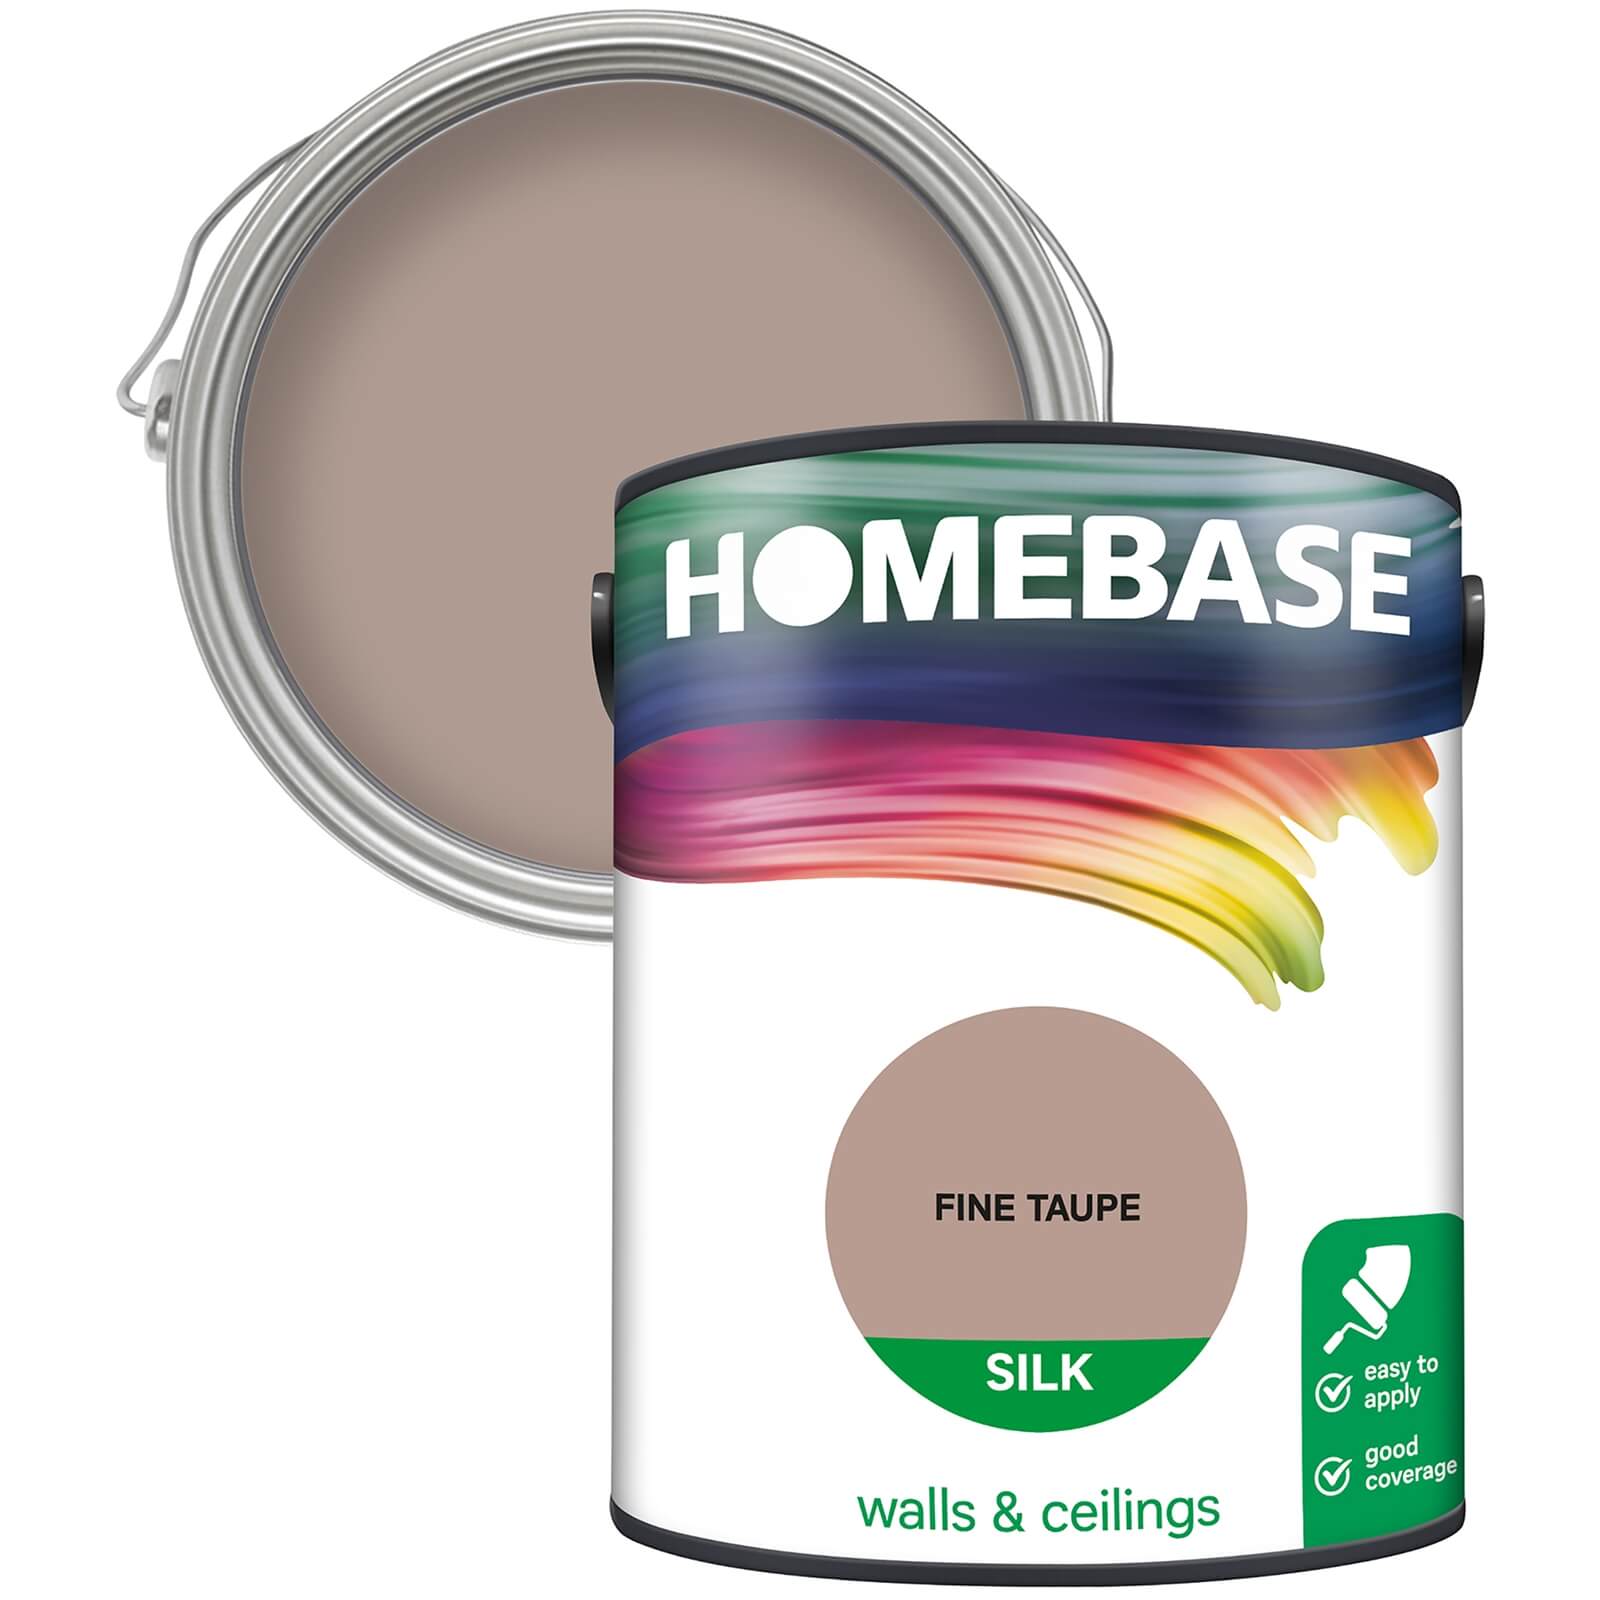 Homebase Silk Emulsion Paint Fine Taupe - 5L